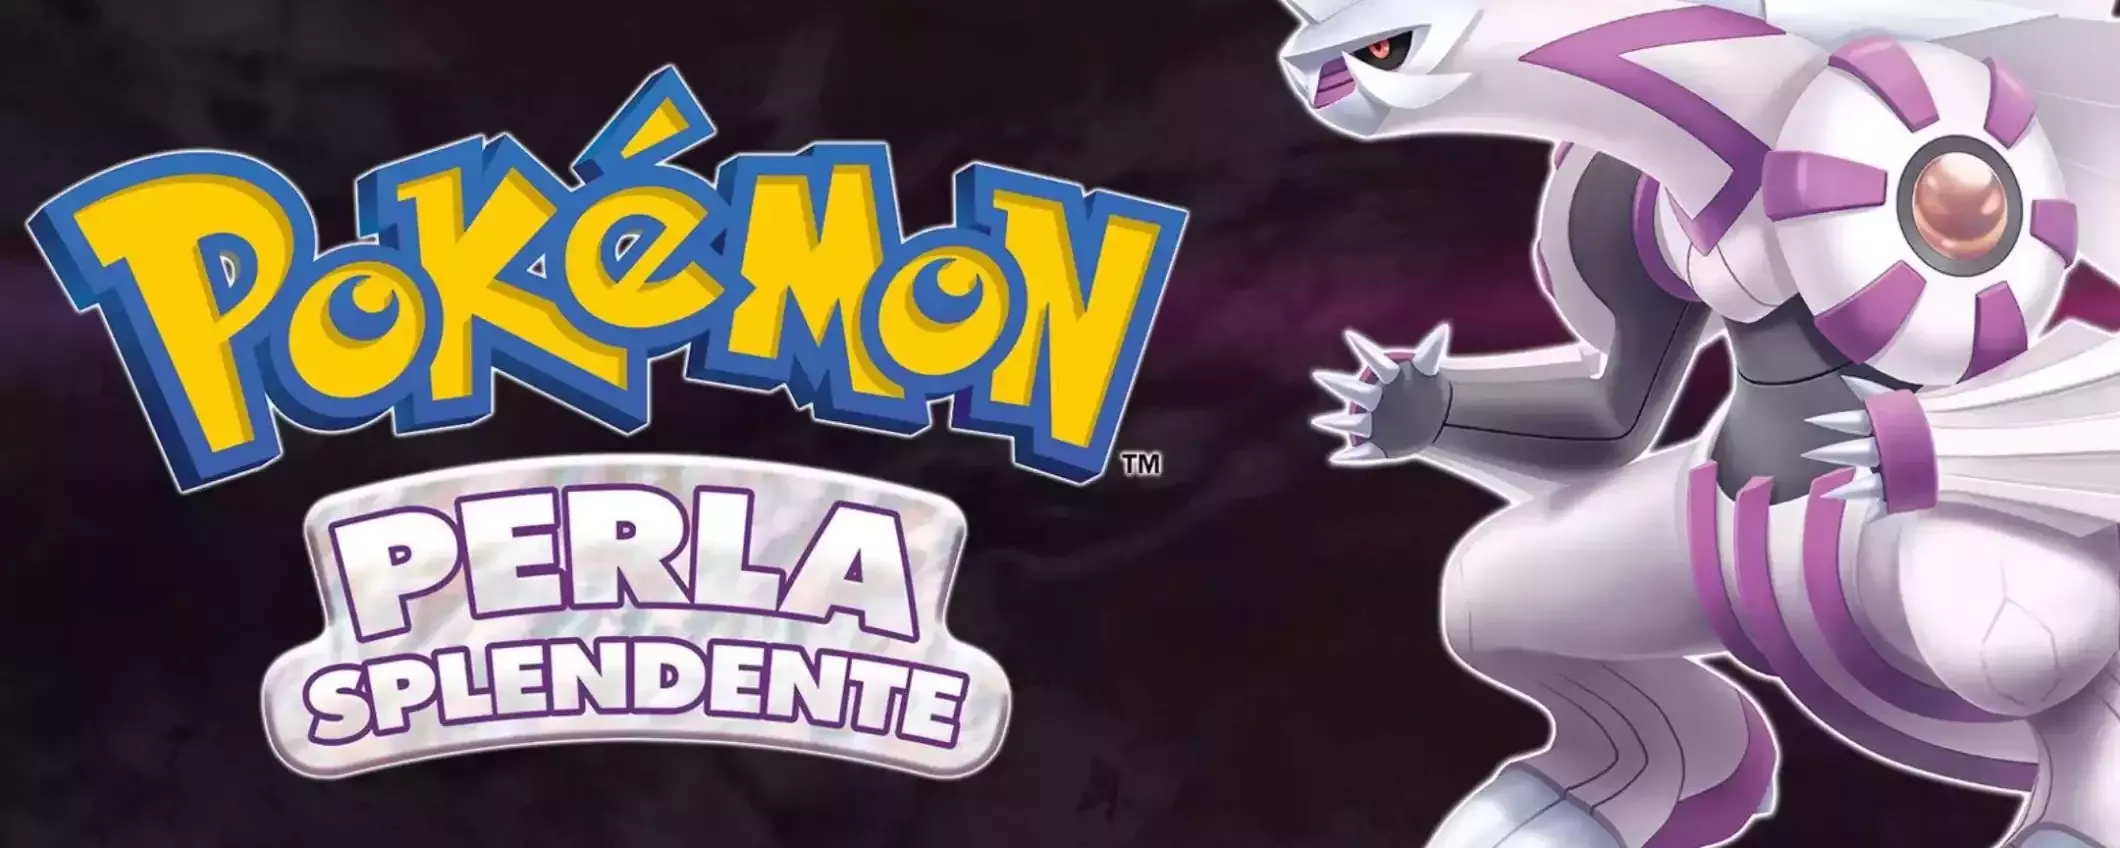 Pokémon Perla Splendente a meno di 45€ su Amazon: corri a prenderlo